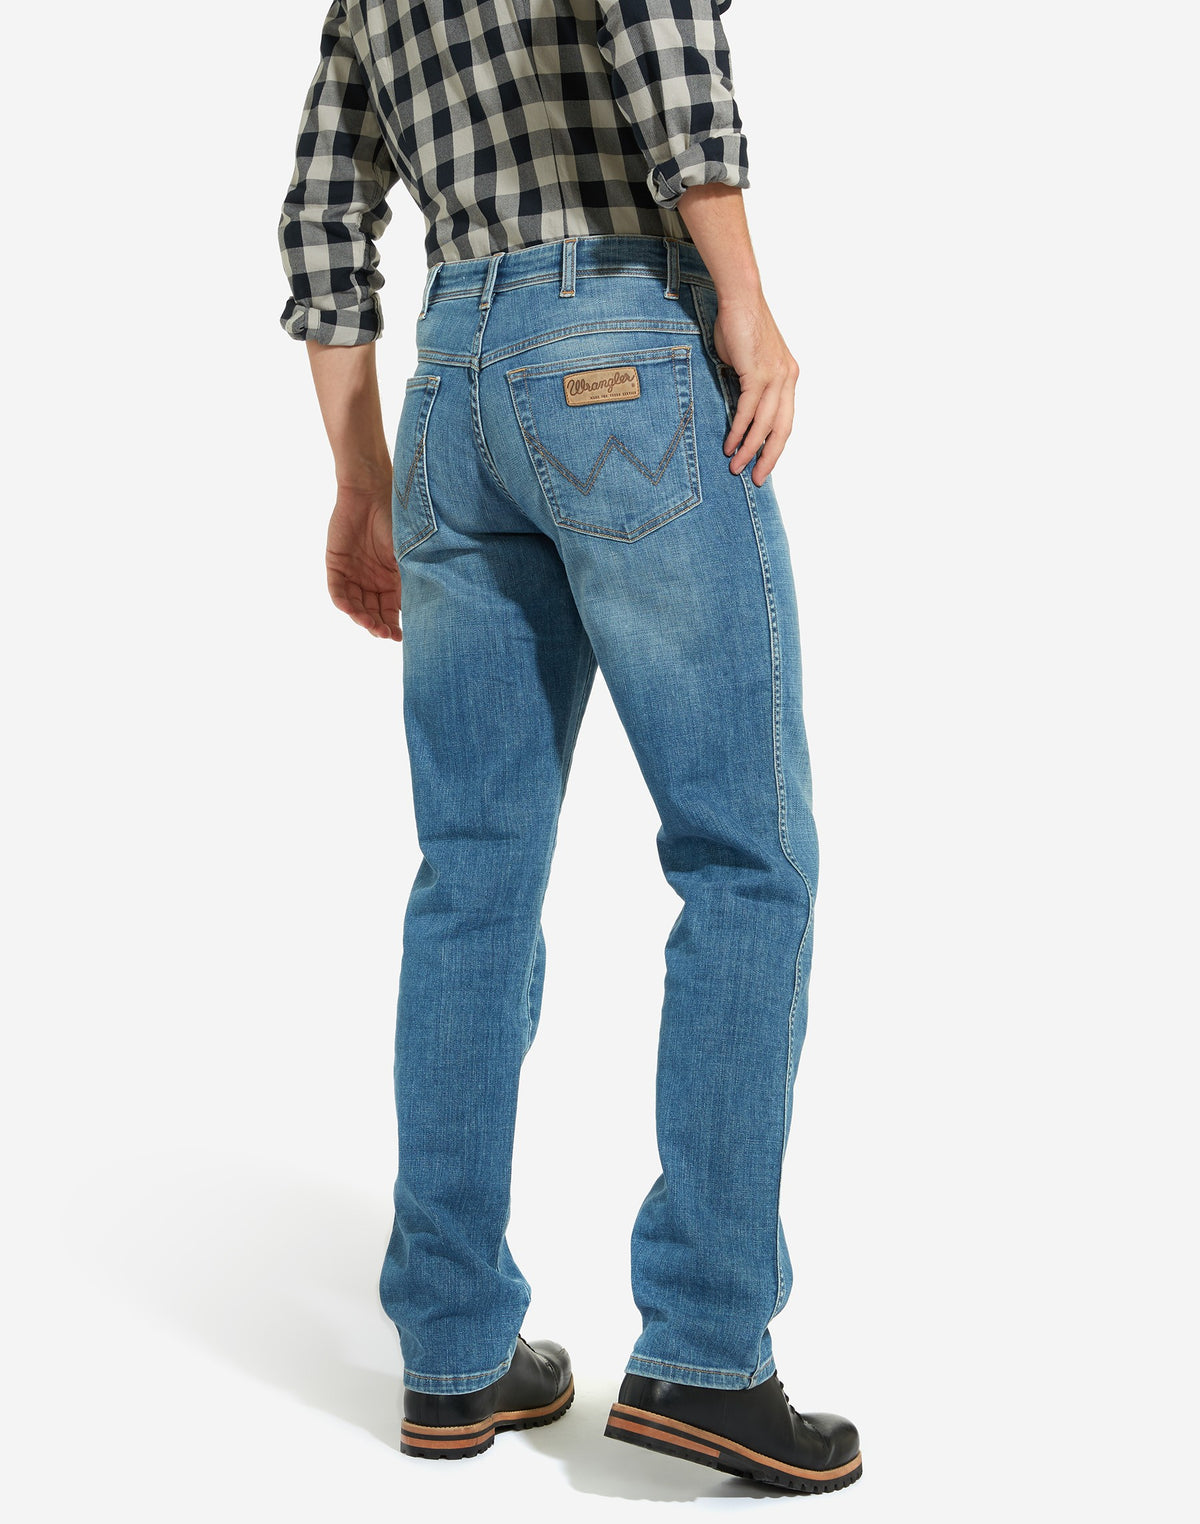 Mens Wrangler 'Texas' Jeans - Denim Stretch - Original Straight Fit, 03, W121-Core, Worn Broke